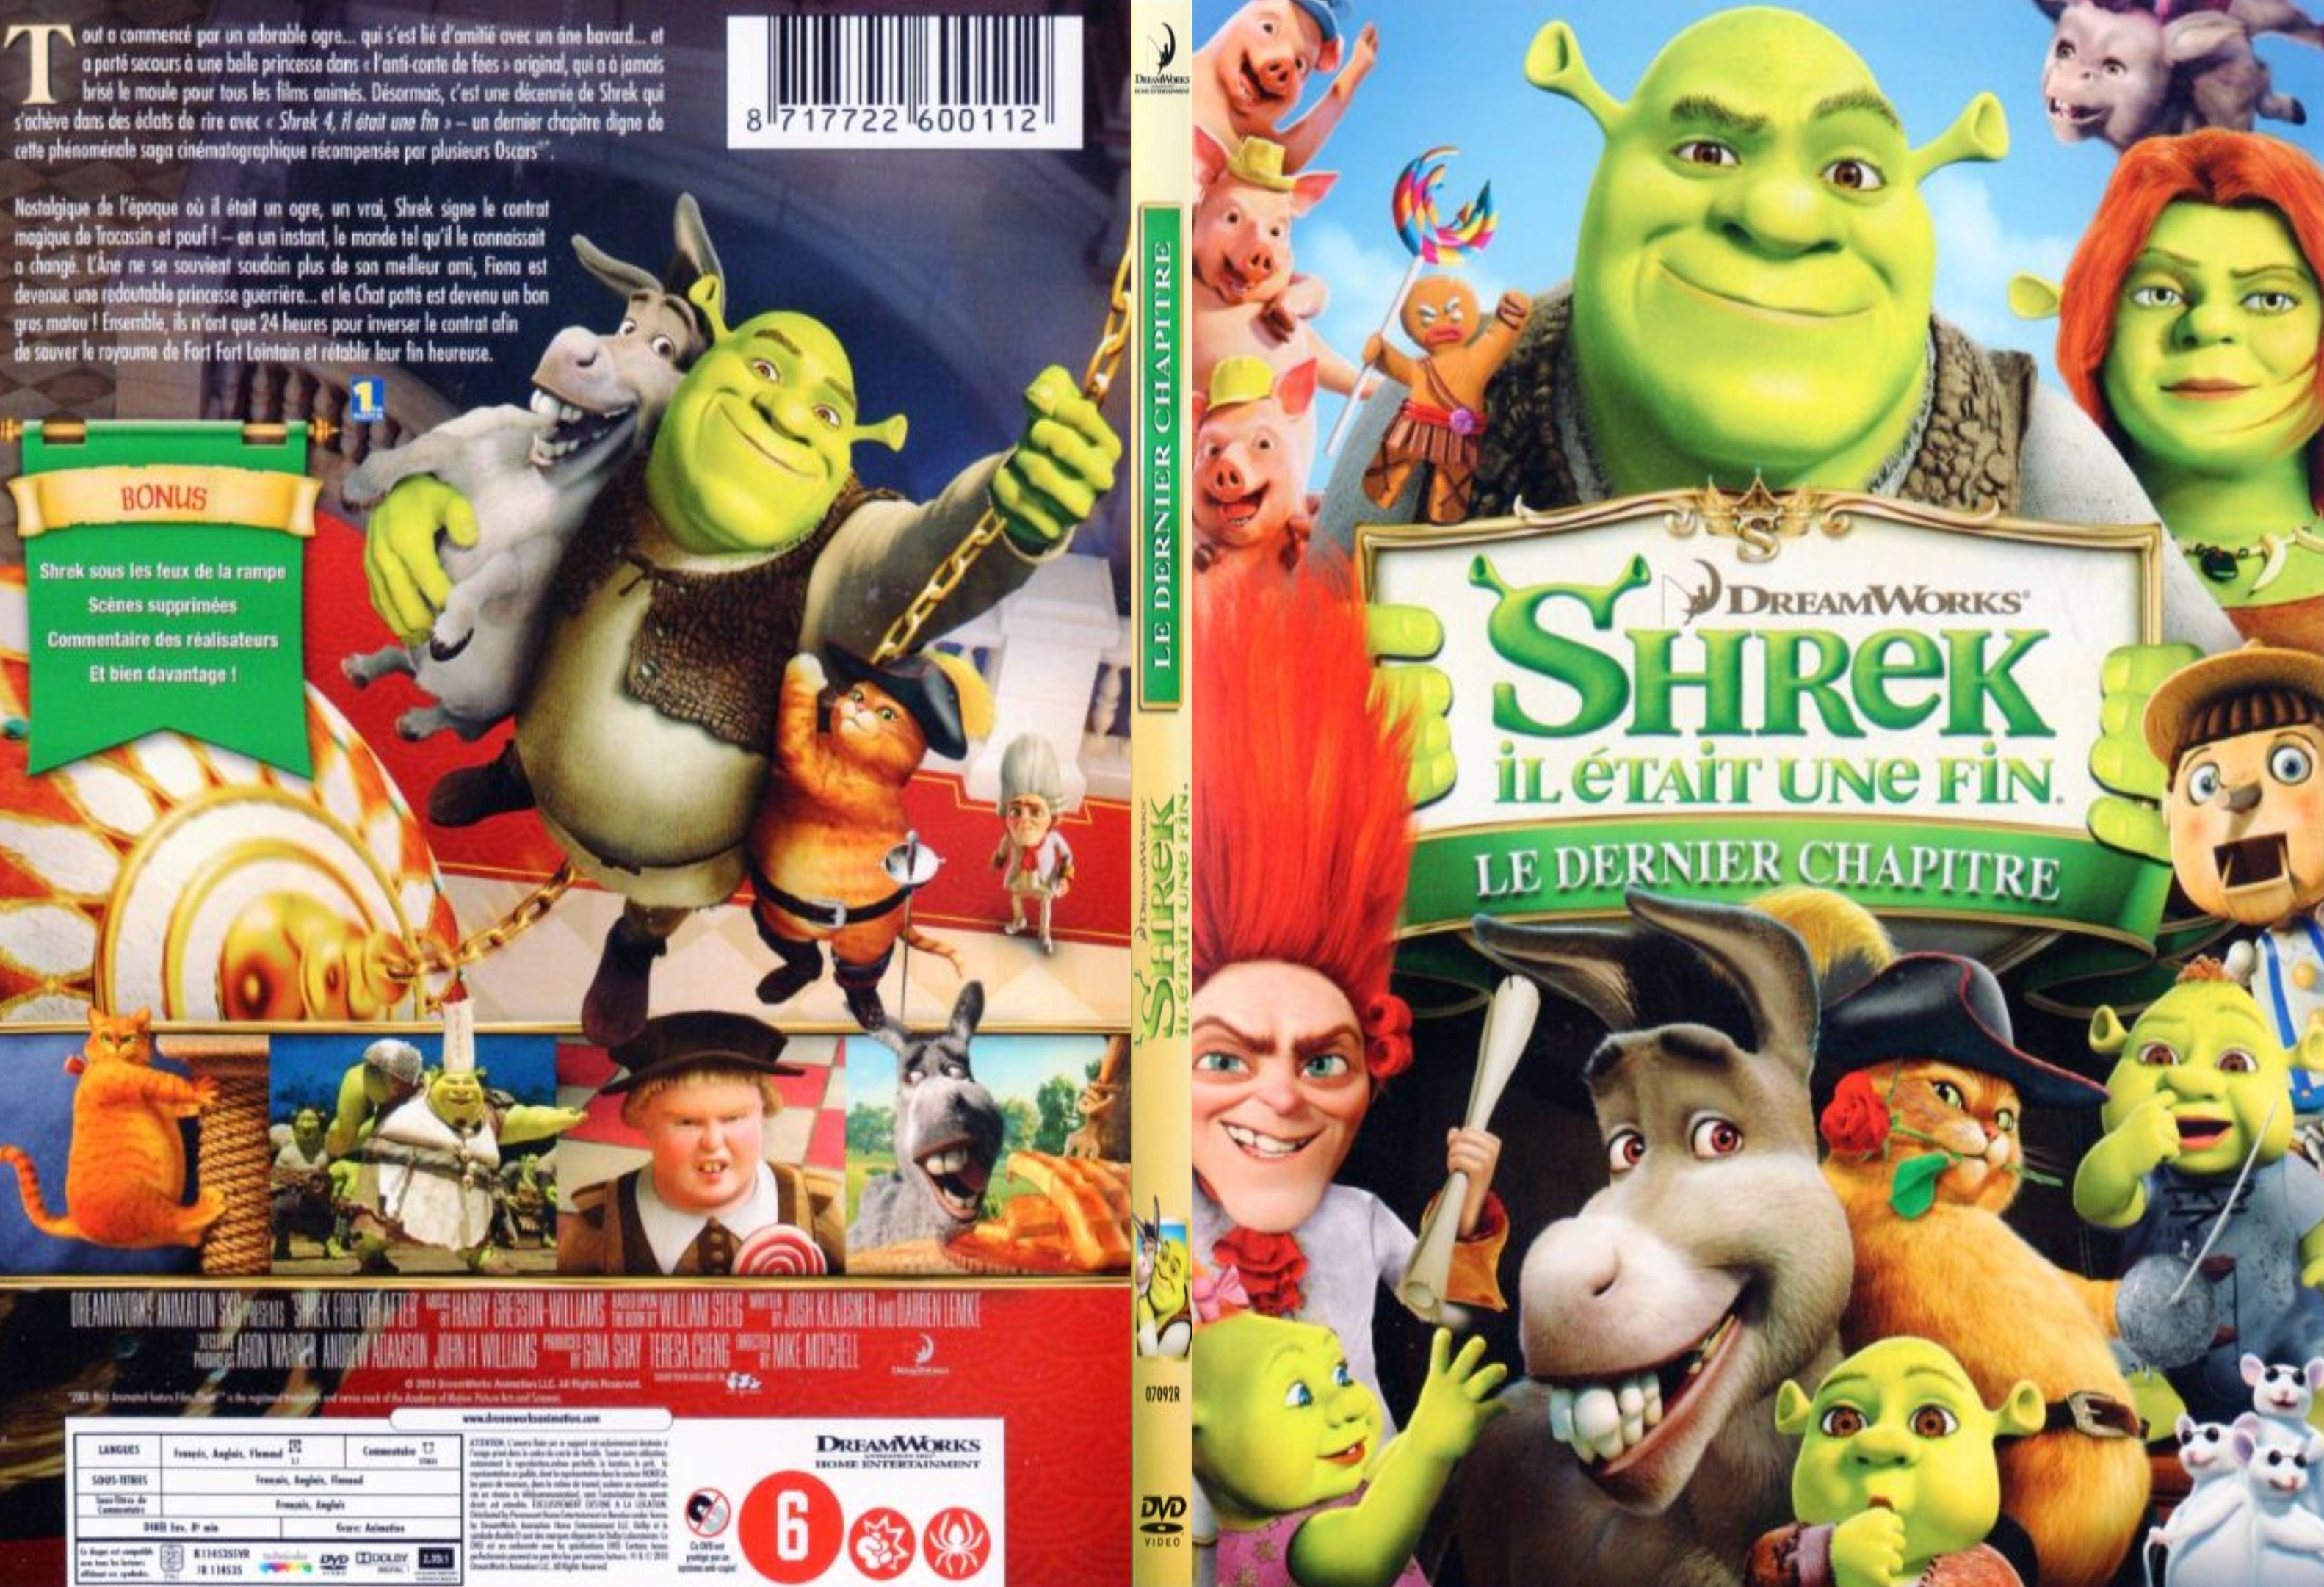 Jaquette DVD Shrek 4 il tait une fin - SLIM